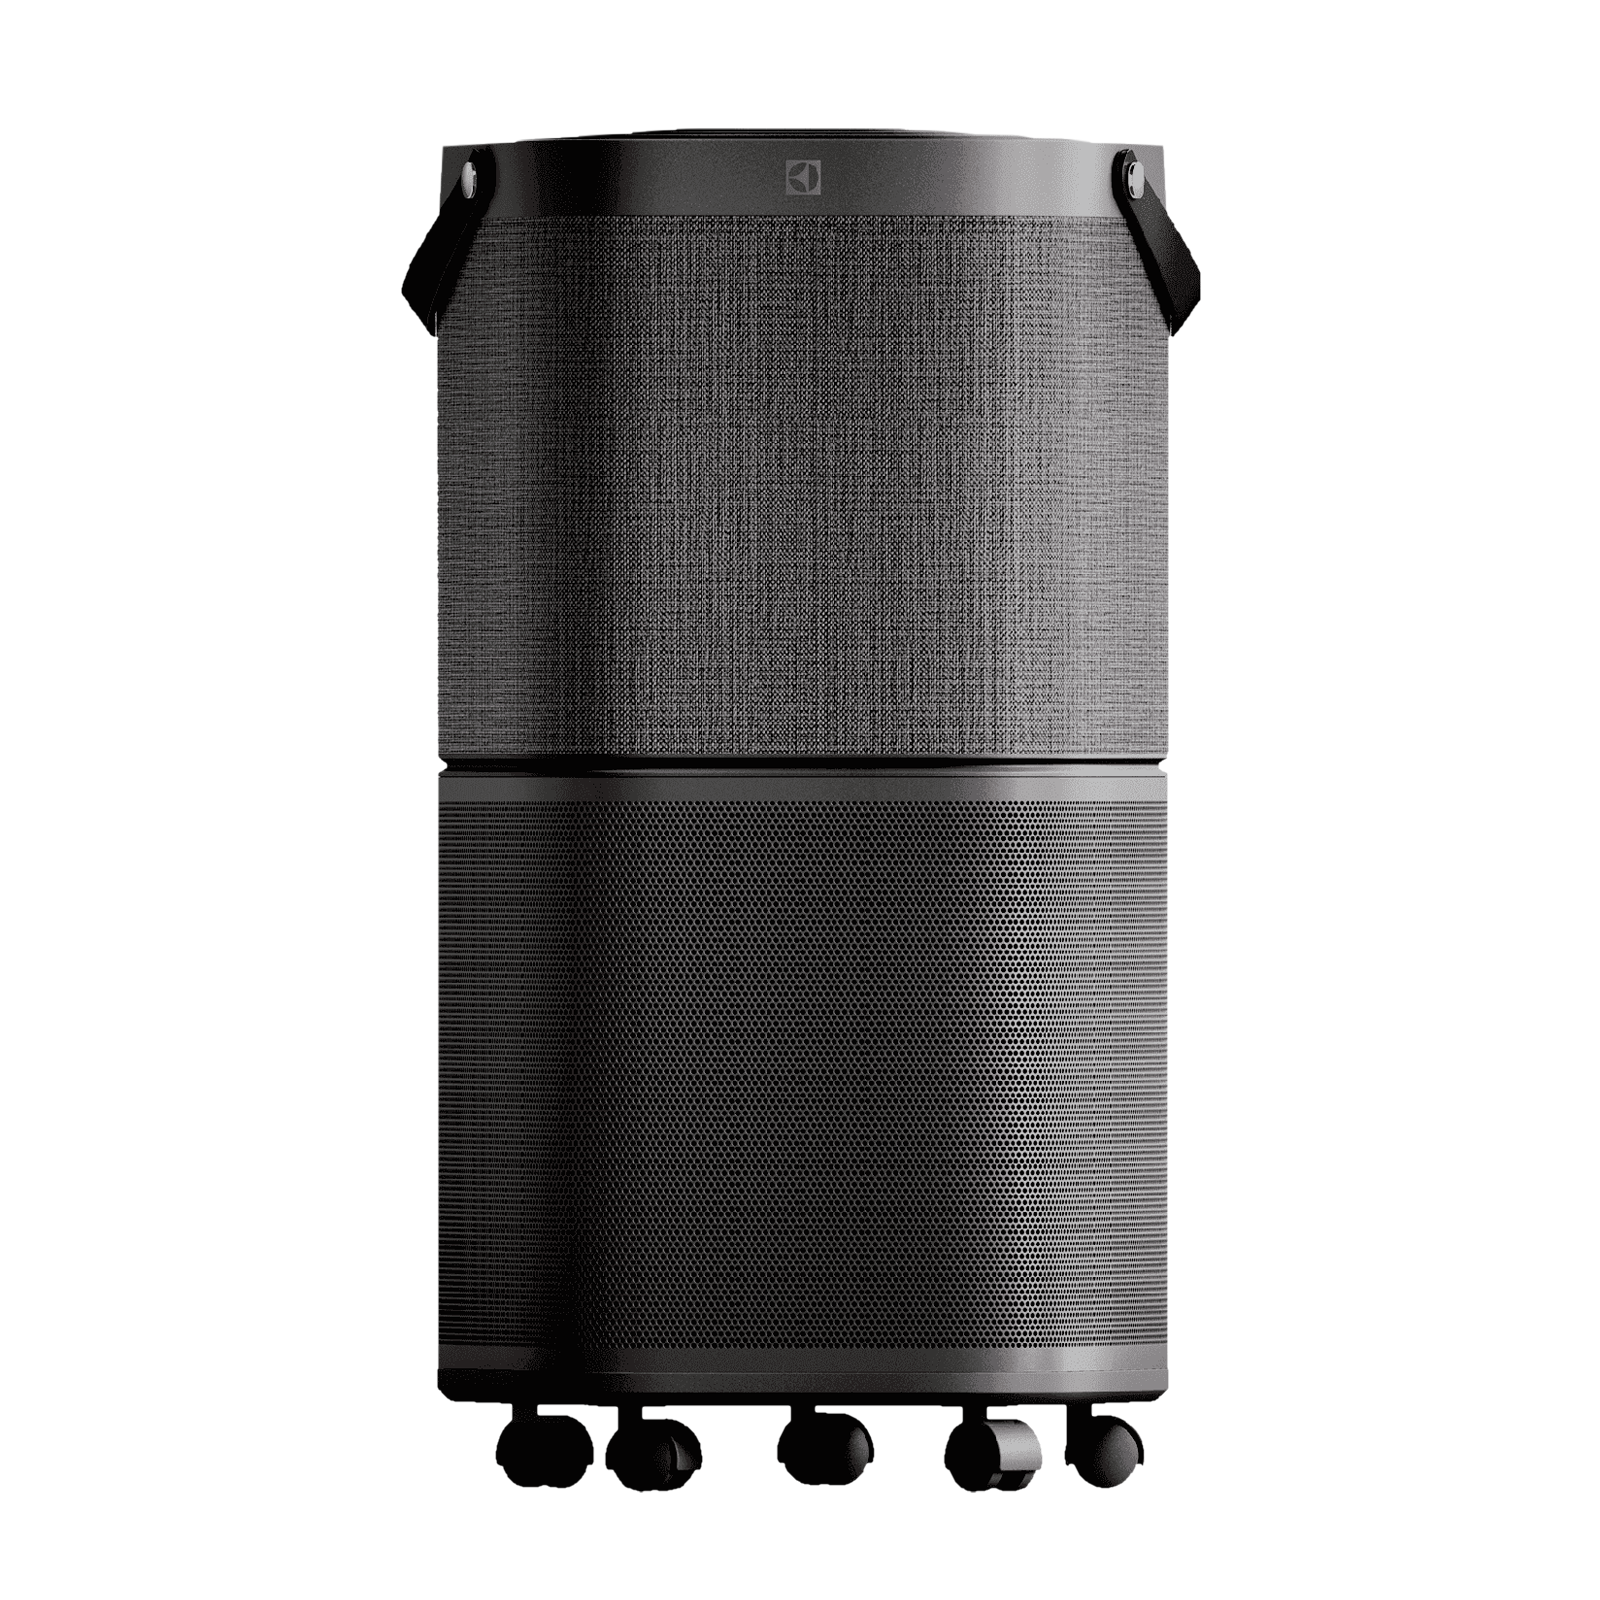 Electrolux Pure A9 PureSense Smart Air Purifier (Air Quality Indicator, PA91-406DG, Dark Grey)